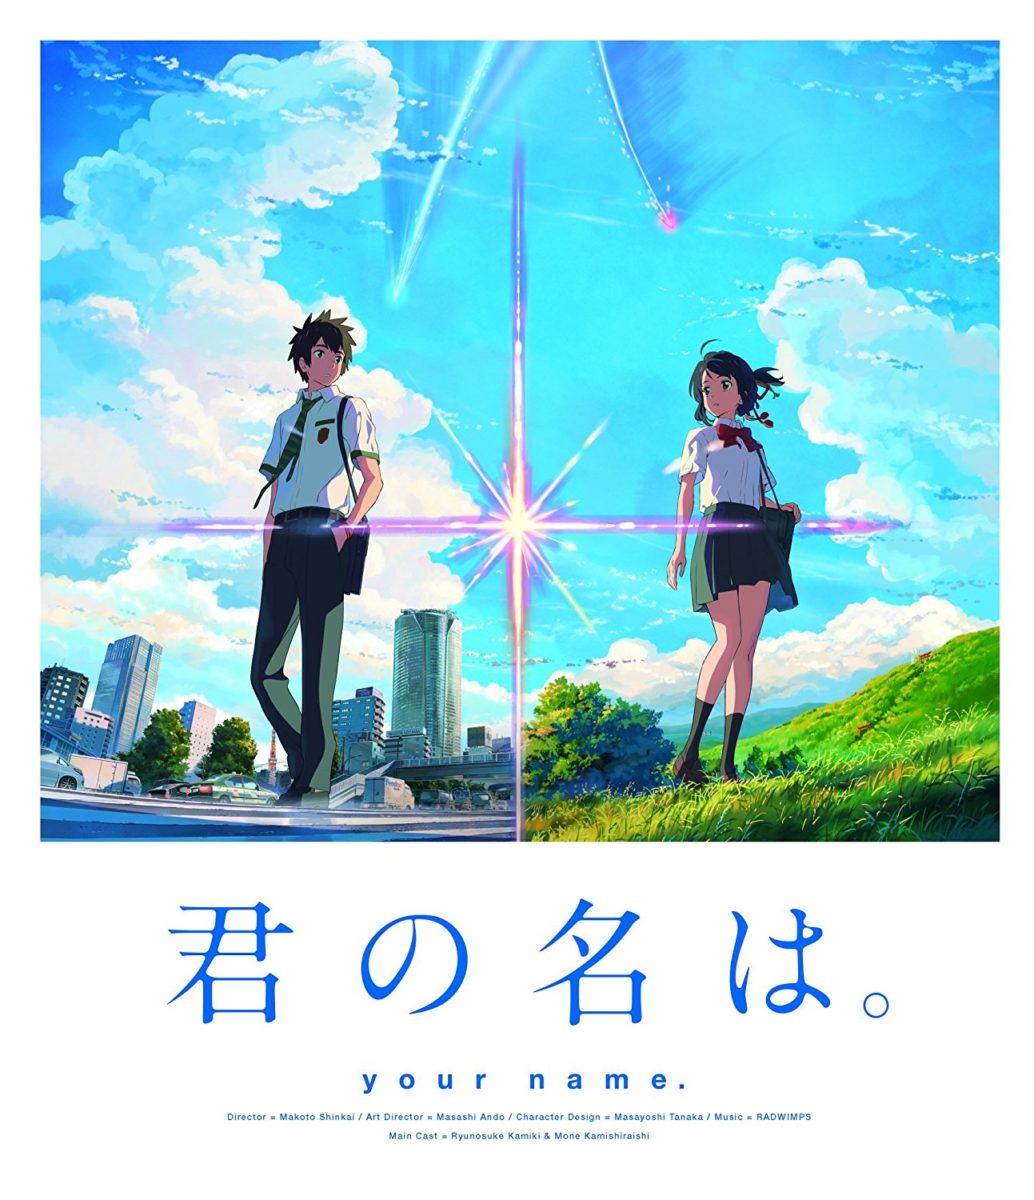 Japan's Best Anime Movie of 2016 “Kimi no Na wa”: 3 Reasons for